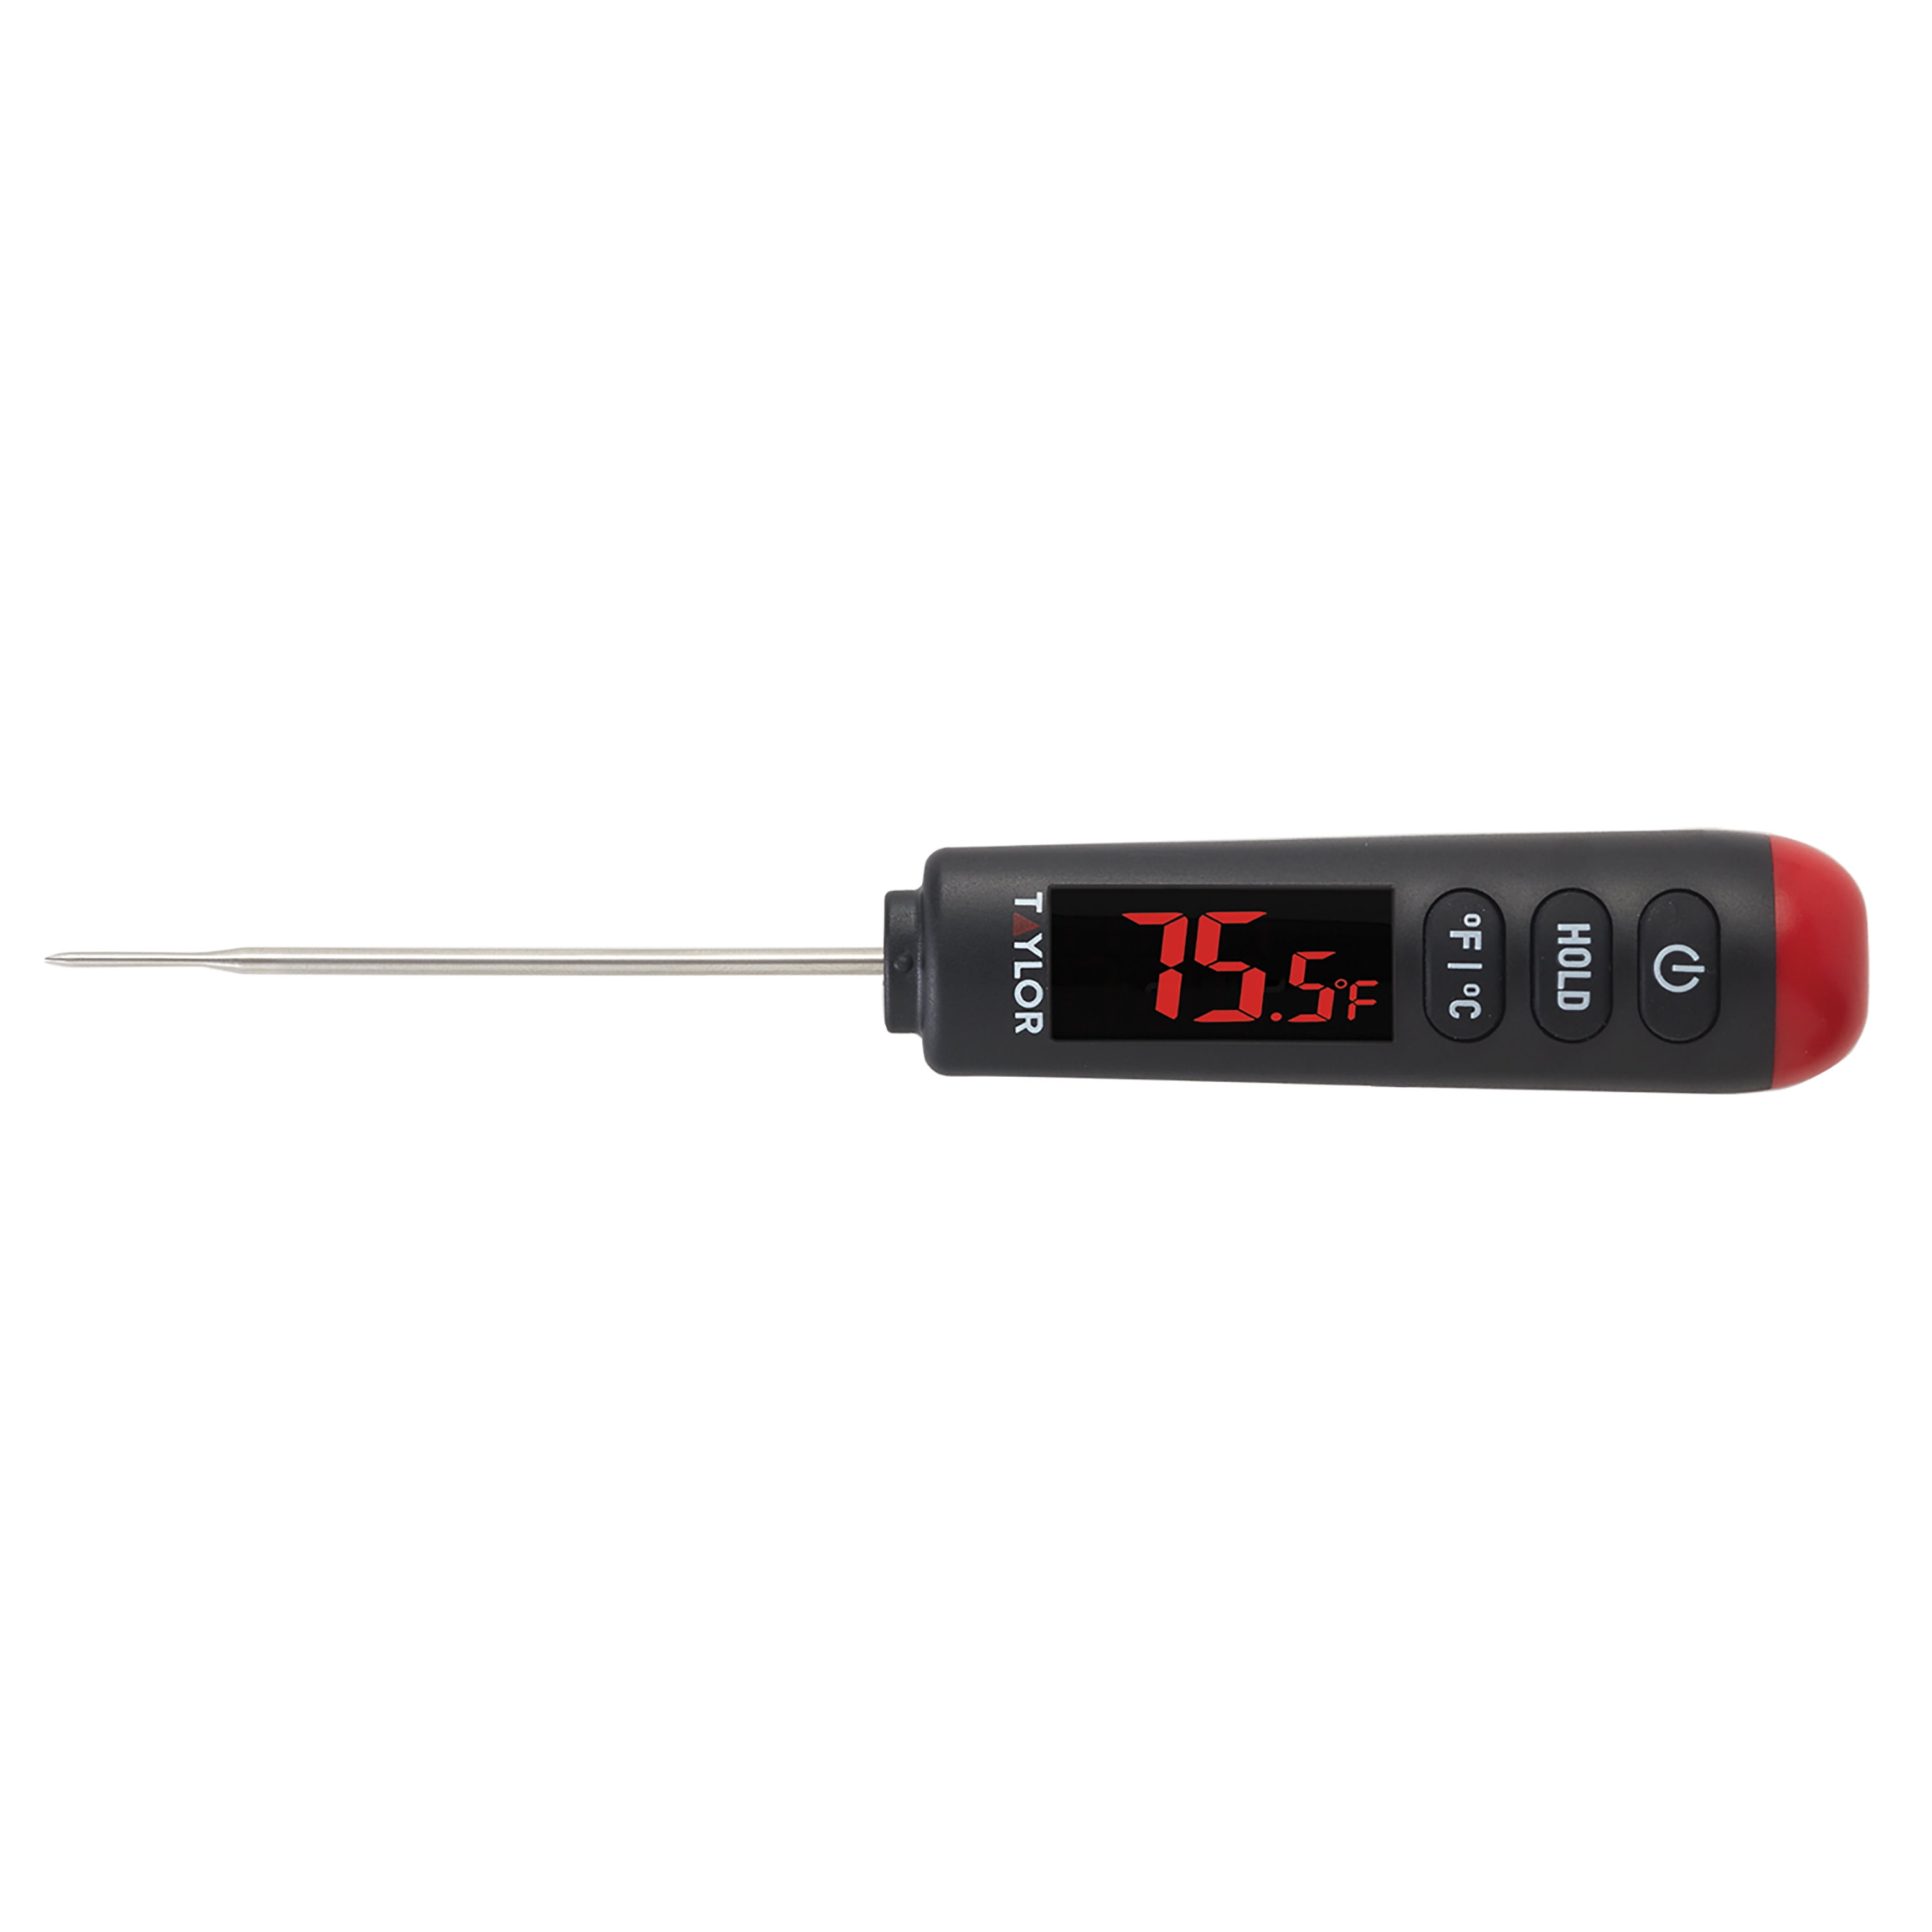 HD Designs Grill Digital Meat Thermometer - Black, 1 ct - Kroger